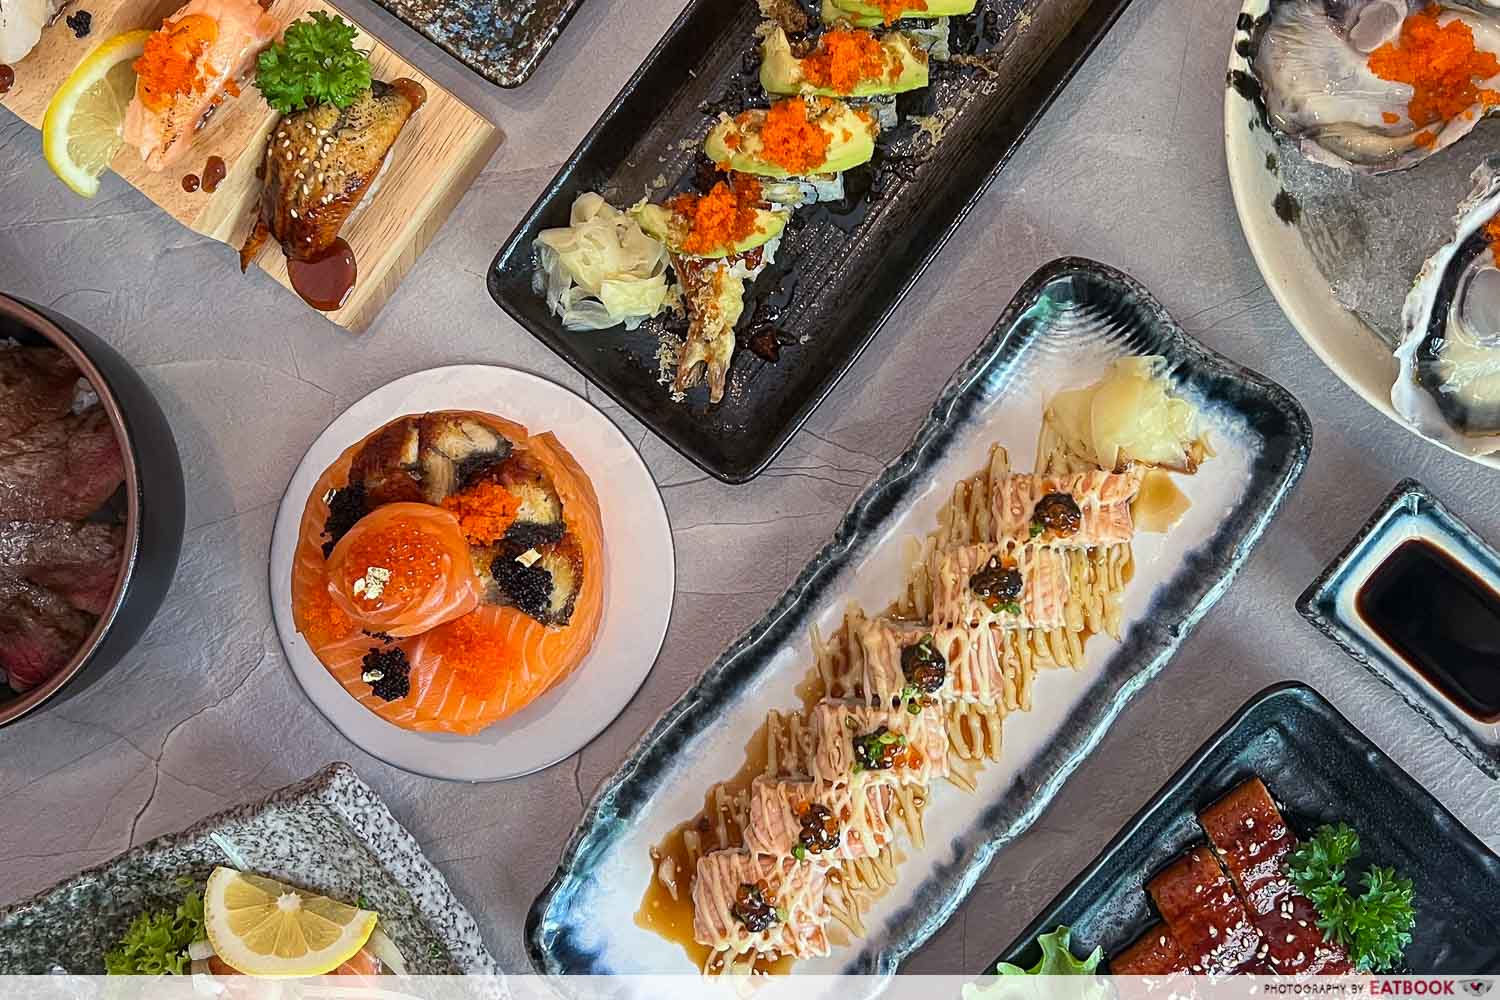 kozen - new restaurants in singapore